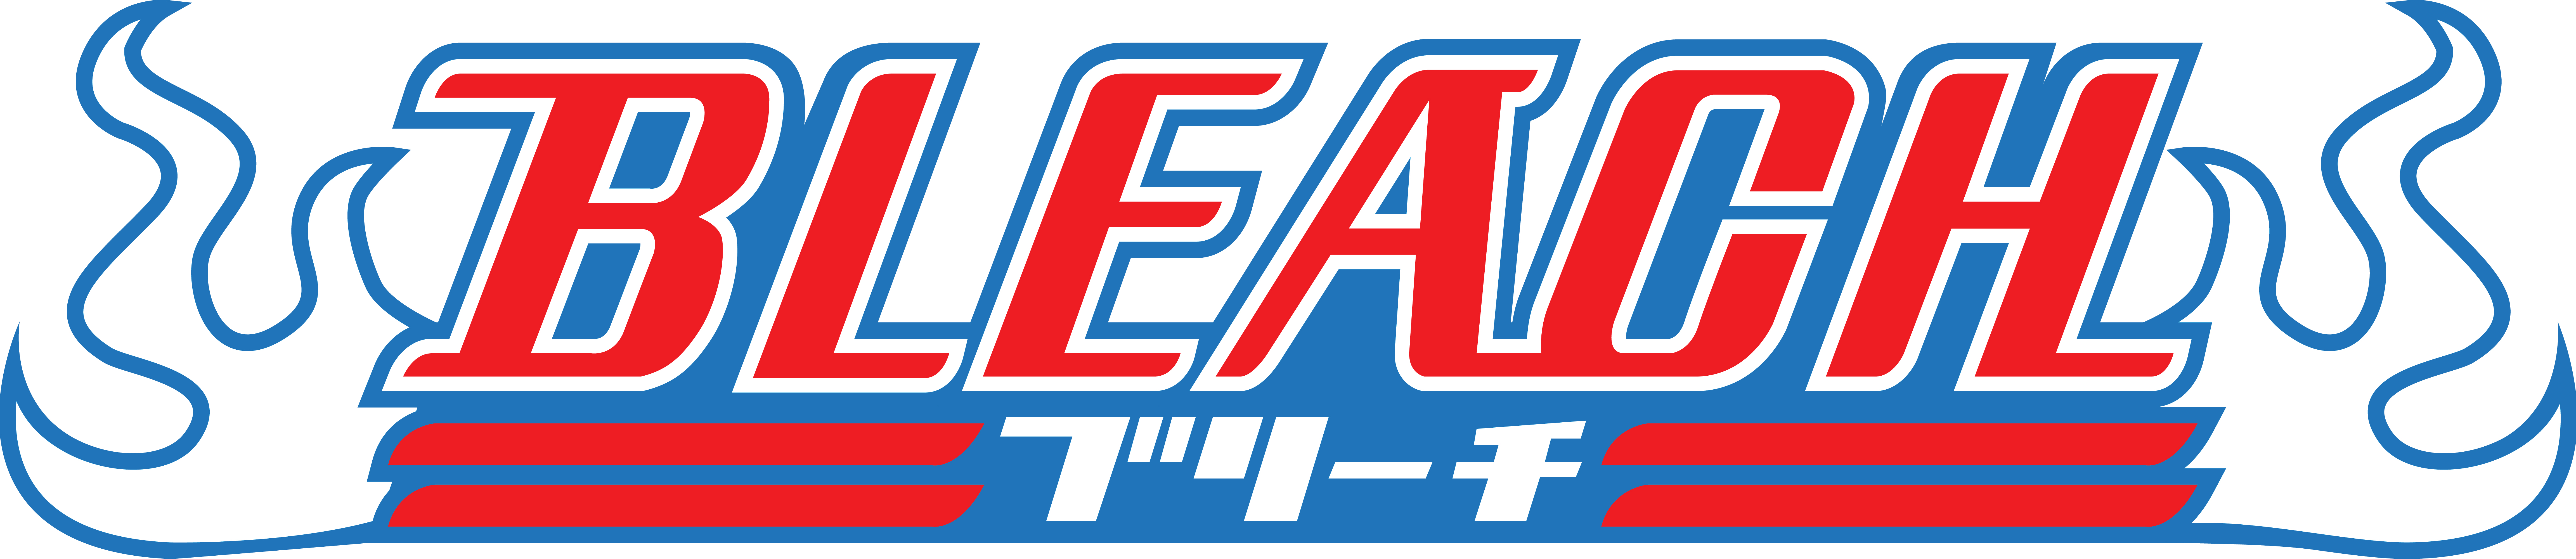 Bleach-Logo1.jpg